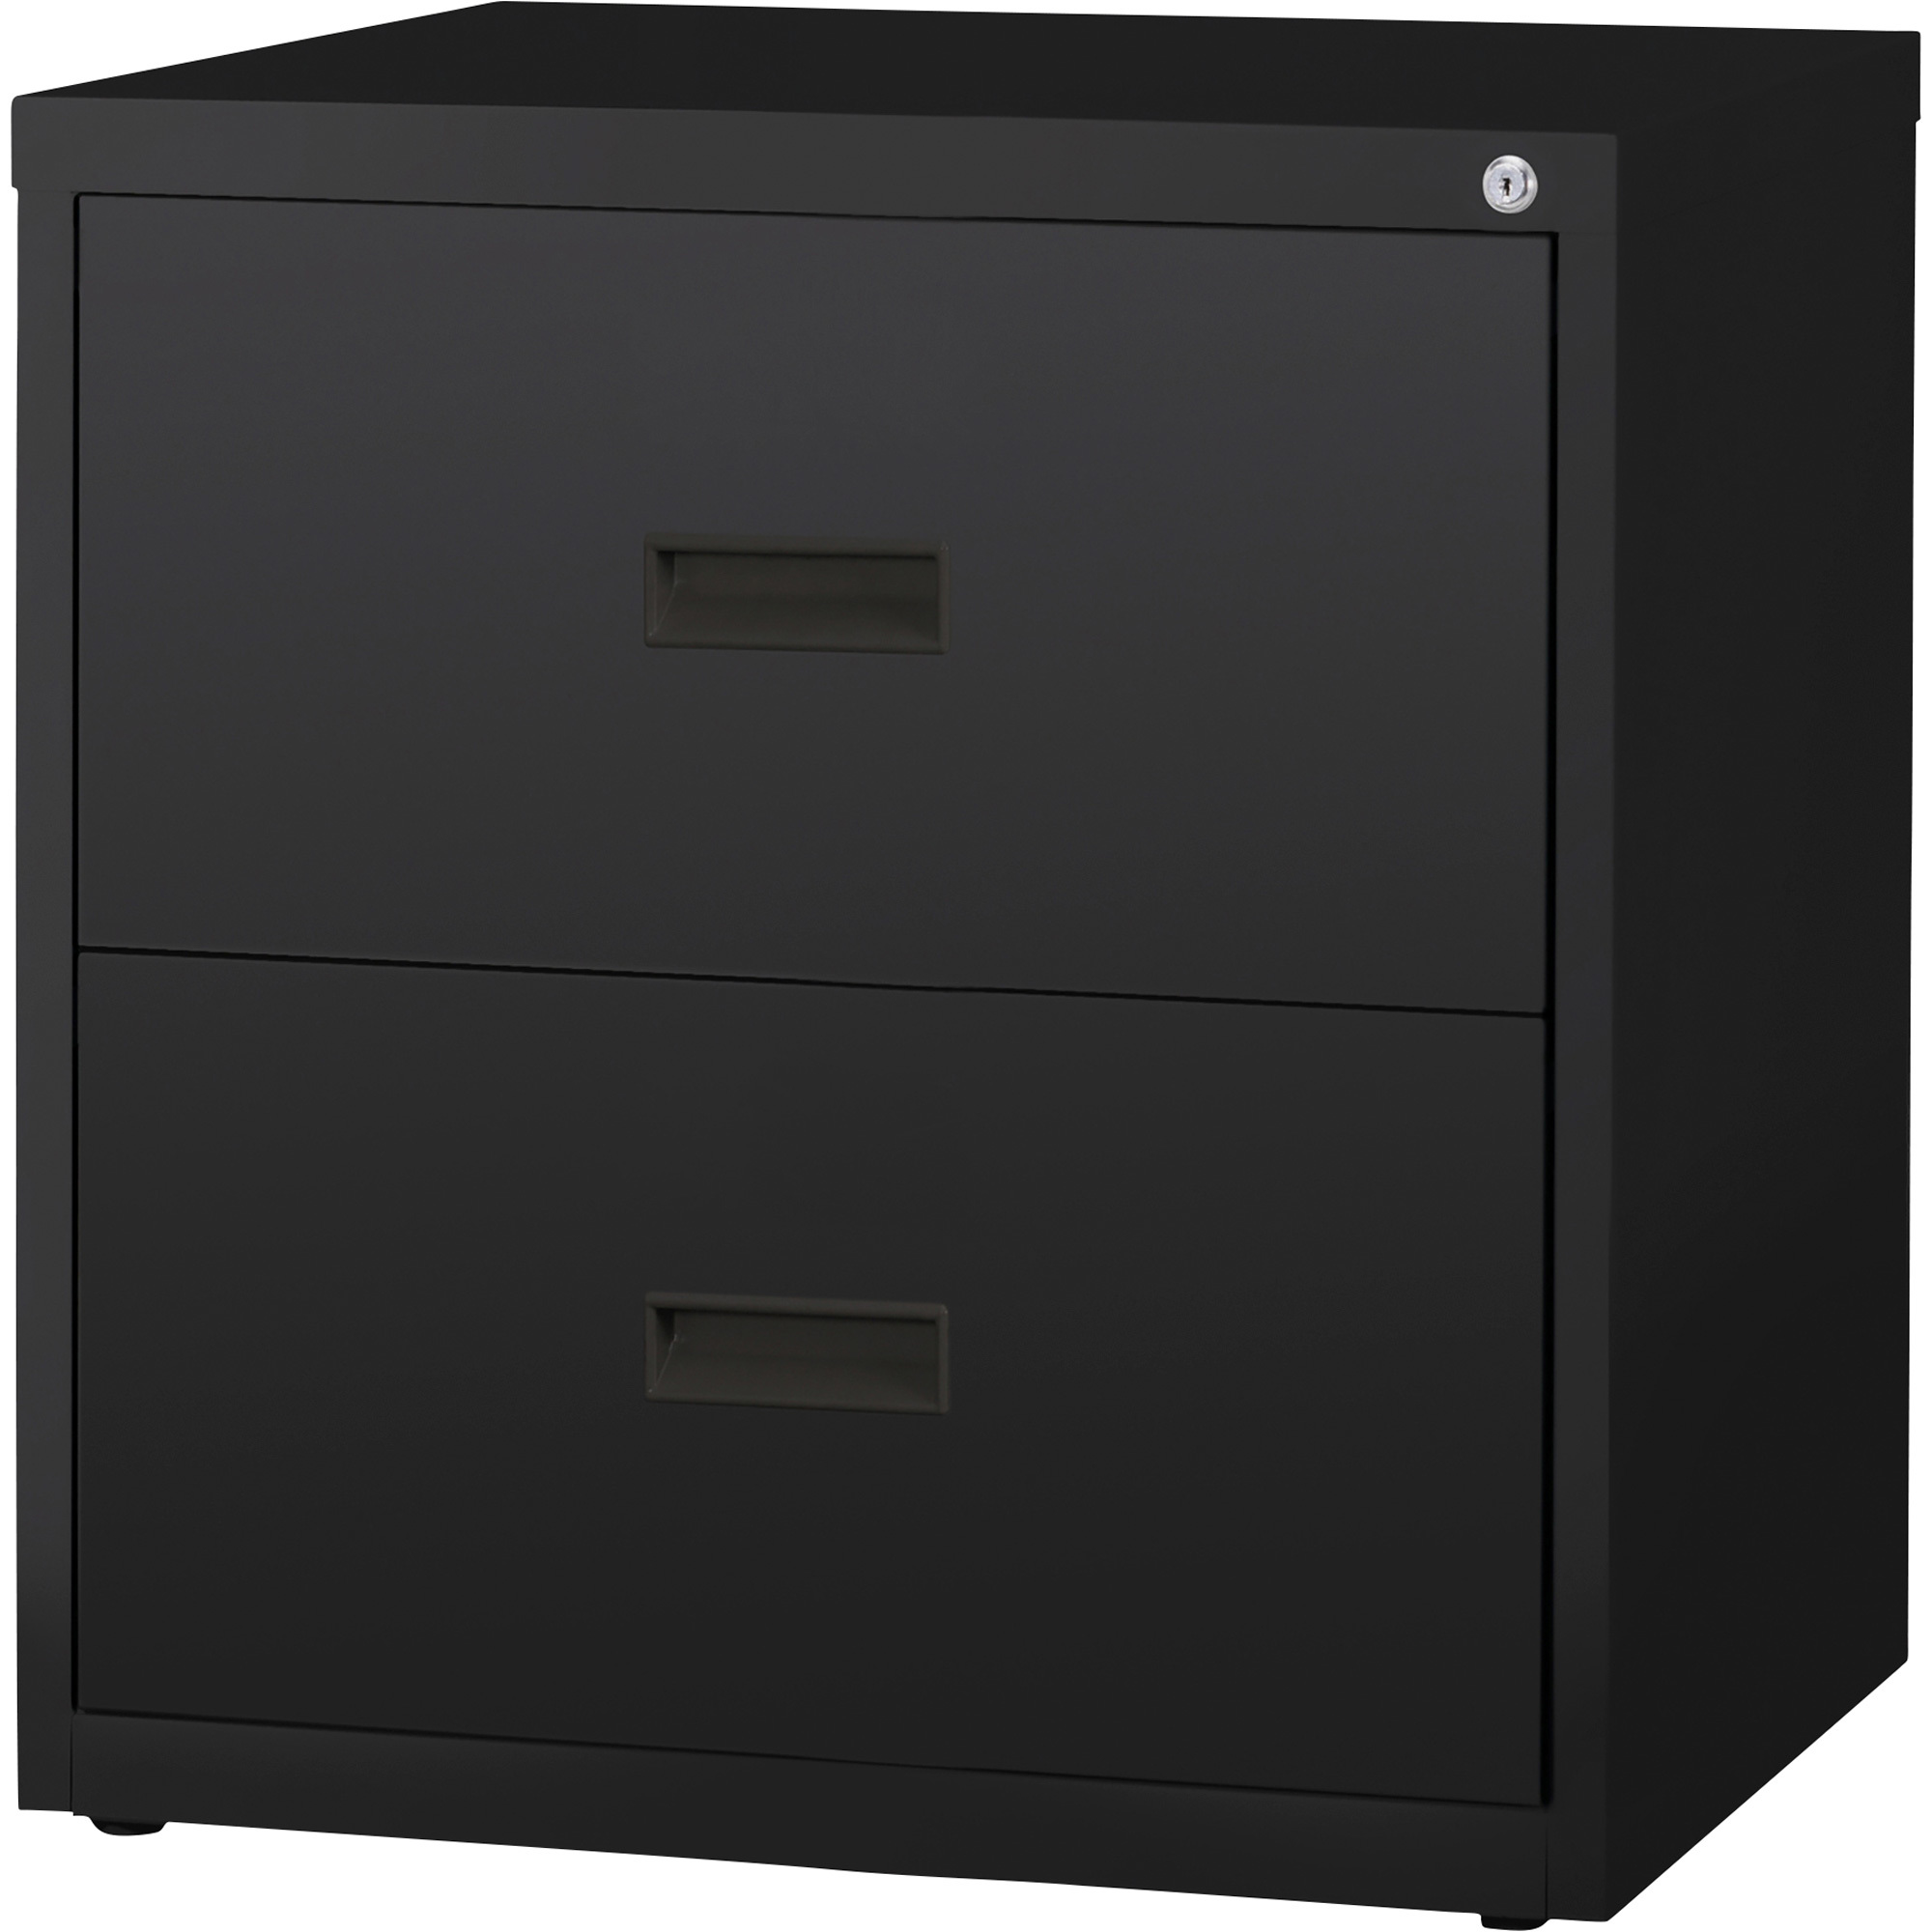 2-Drawer File Cabinet — Black, 30Inch W x 18 5/8Inch D x 52 1/2Inch H, Model - Hirsh Industries 14955